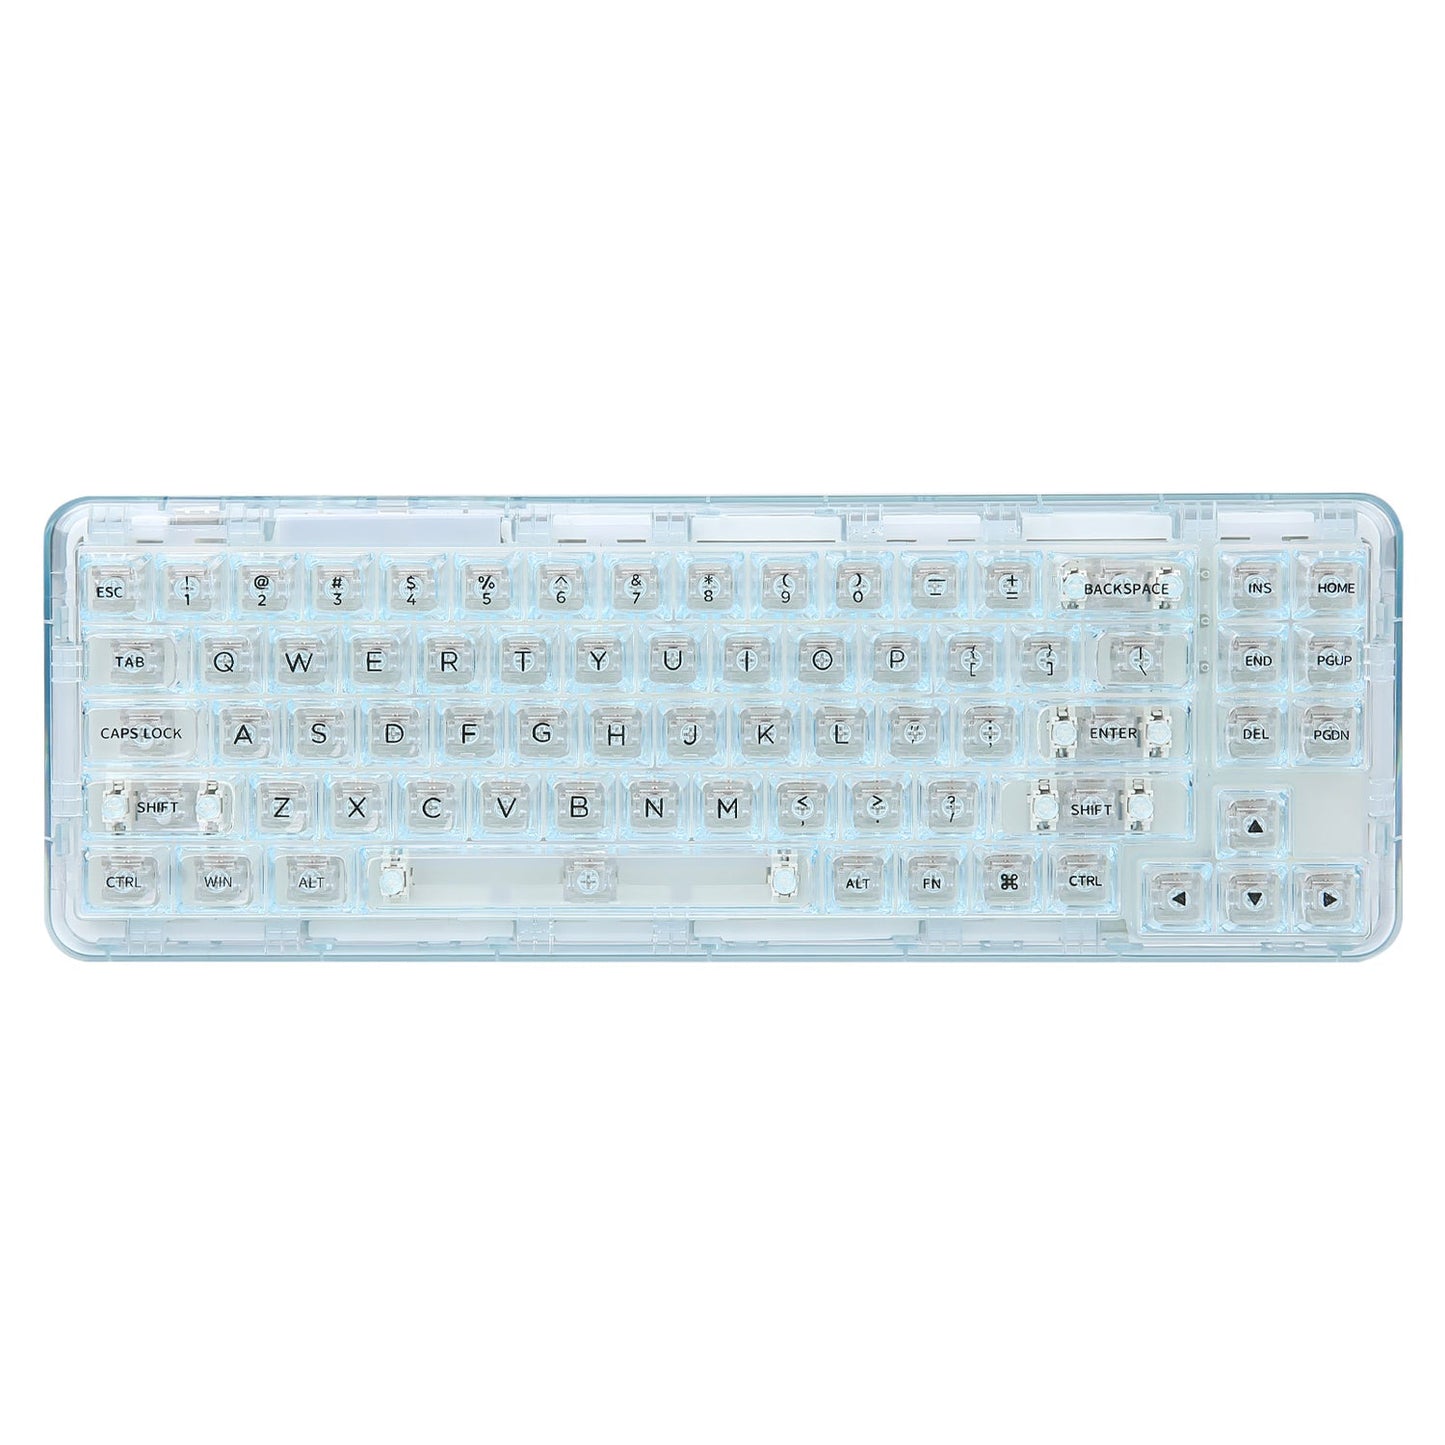 Yunzii X71 Transparent Mechanical Keyboard